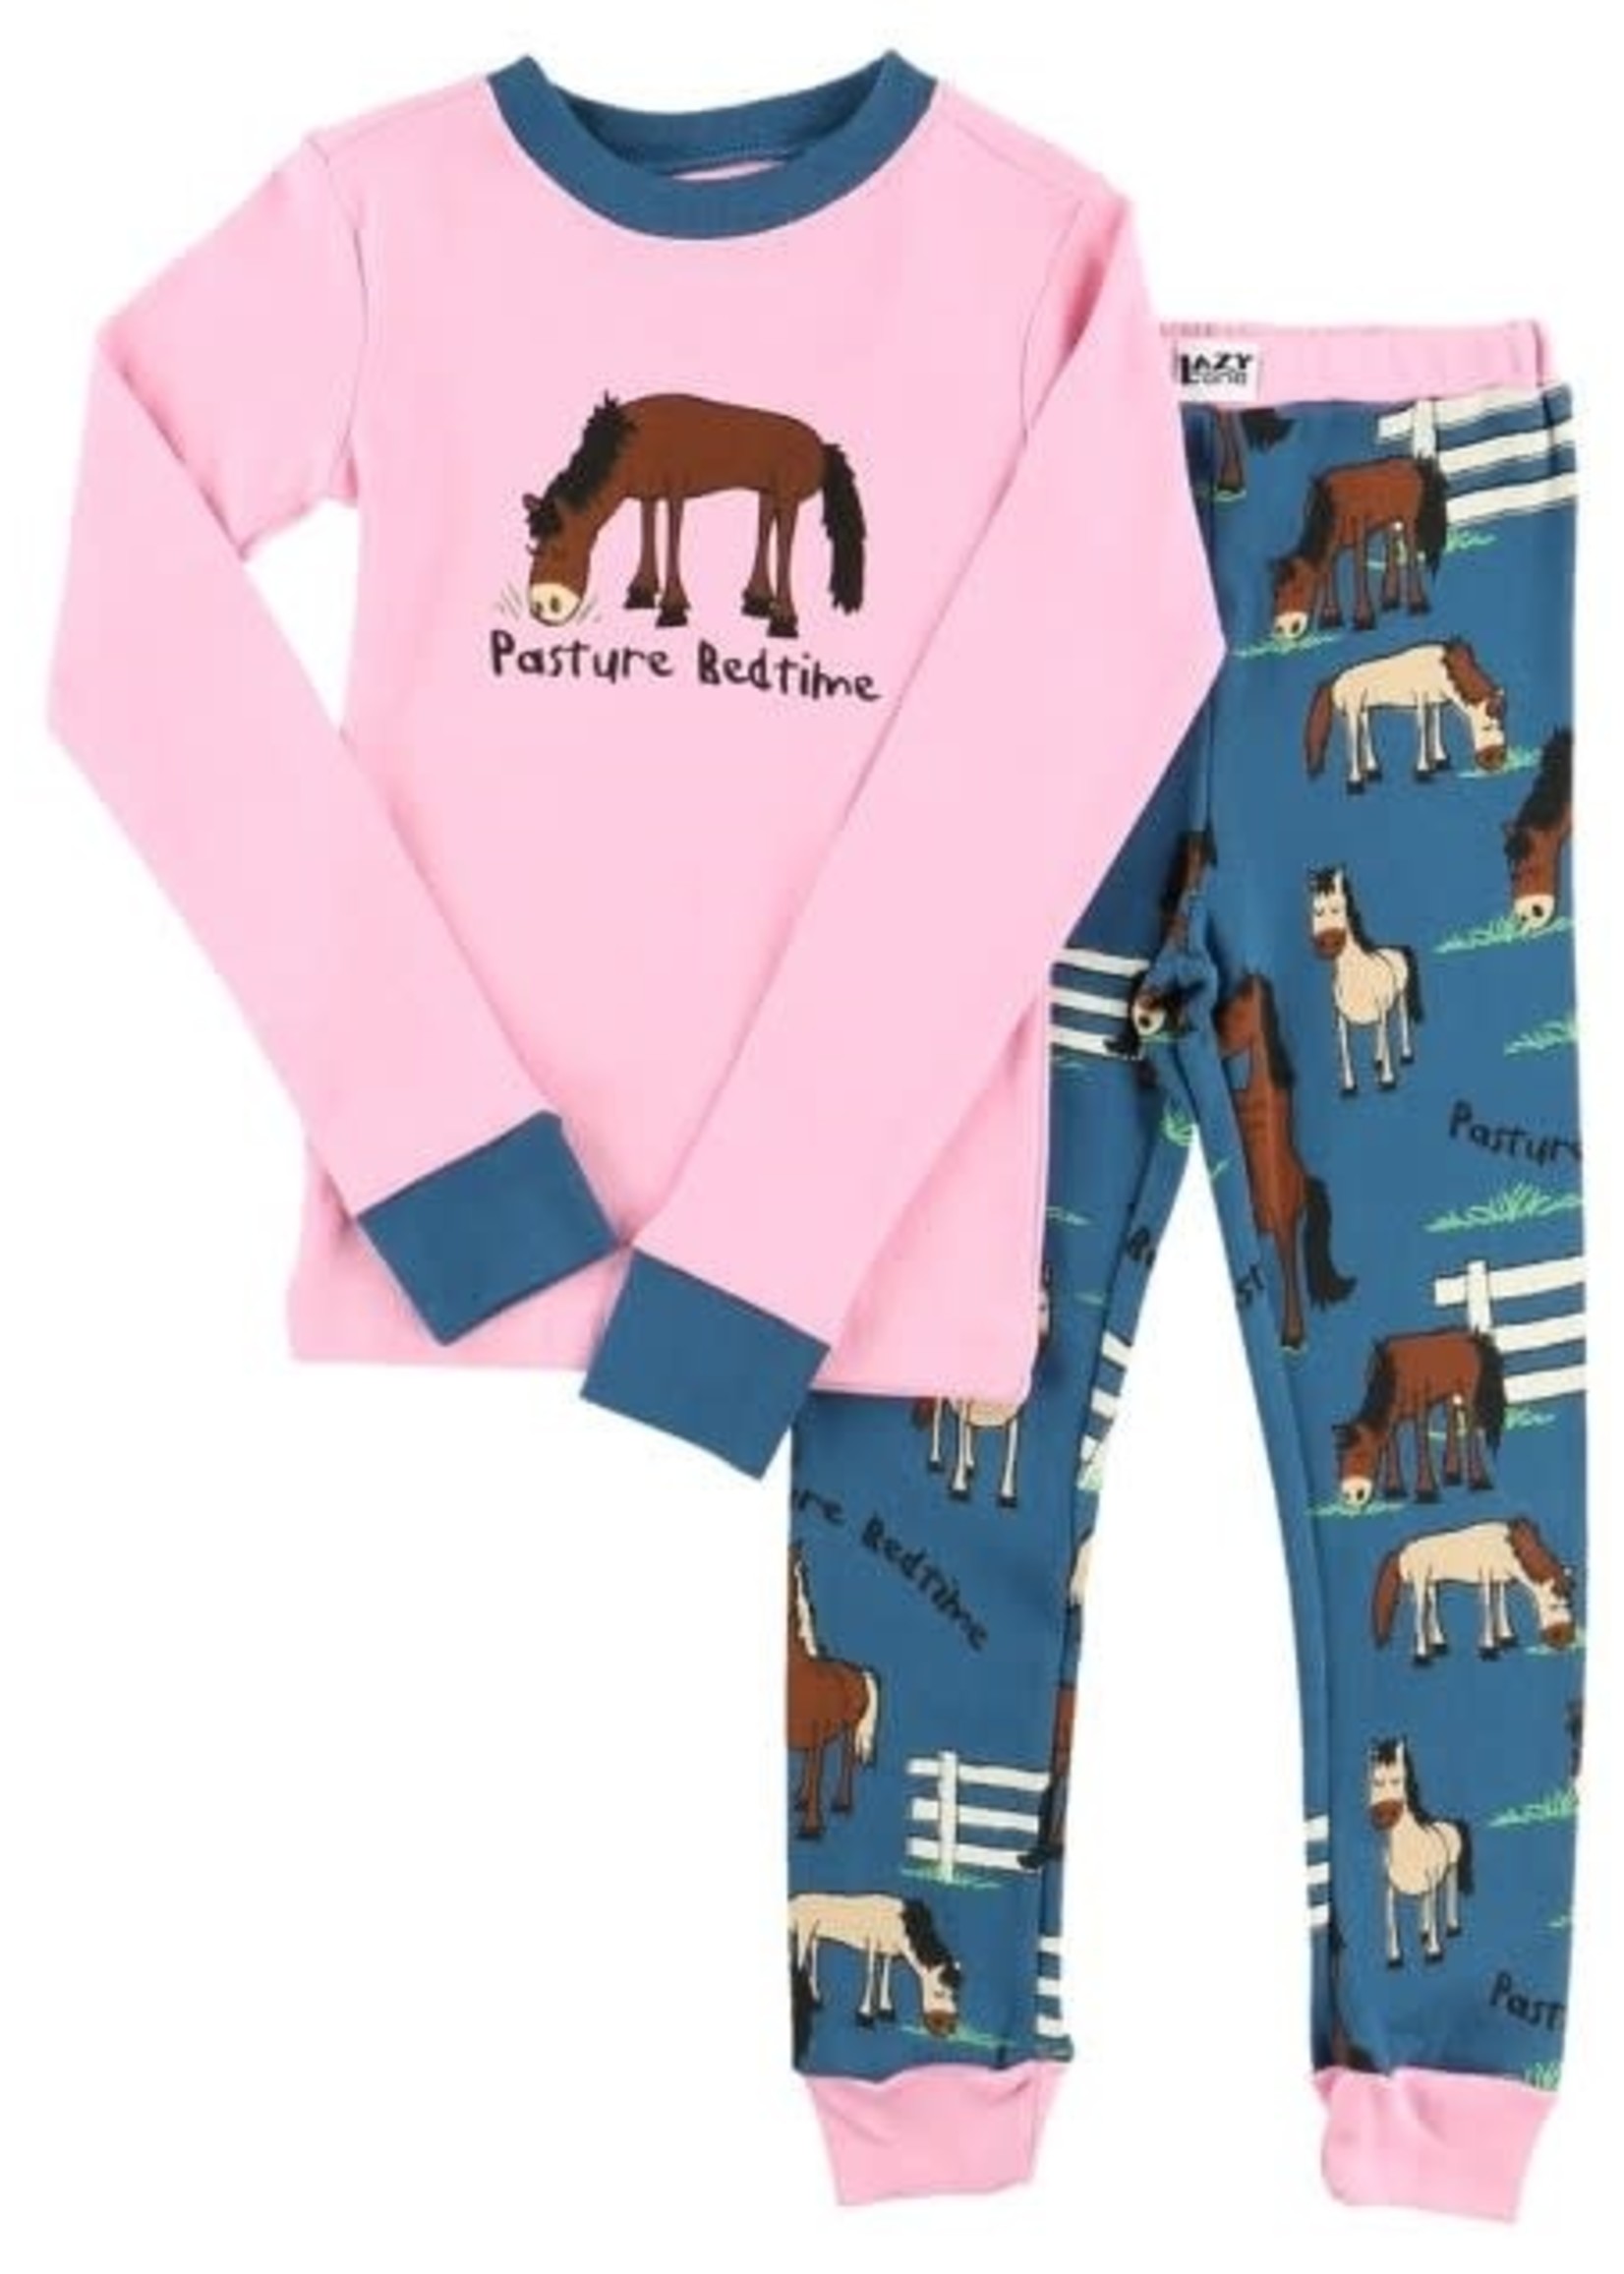 Pasture Bedtime Kid's Pajama Set